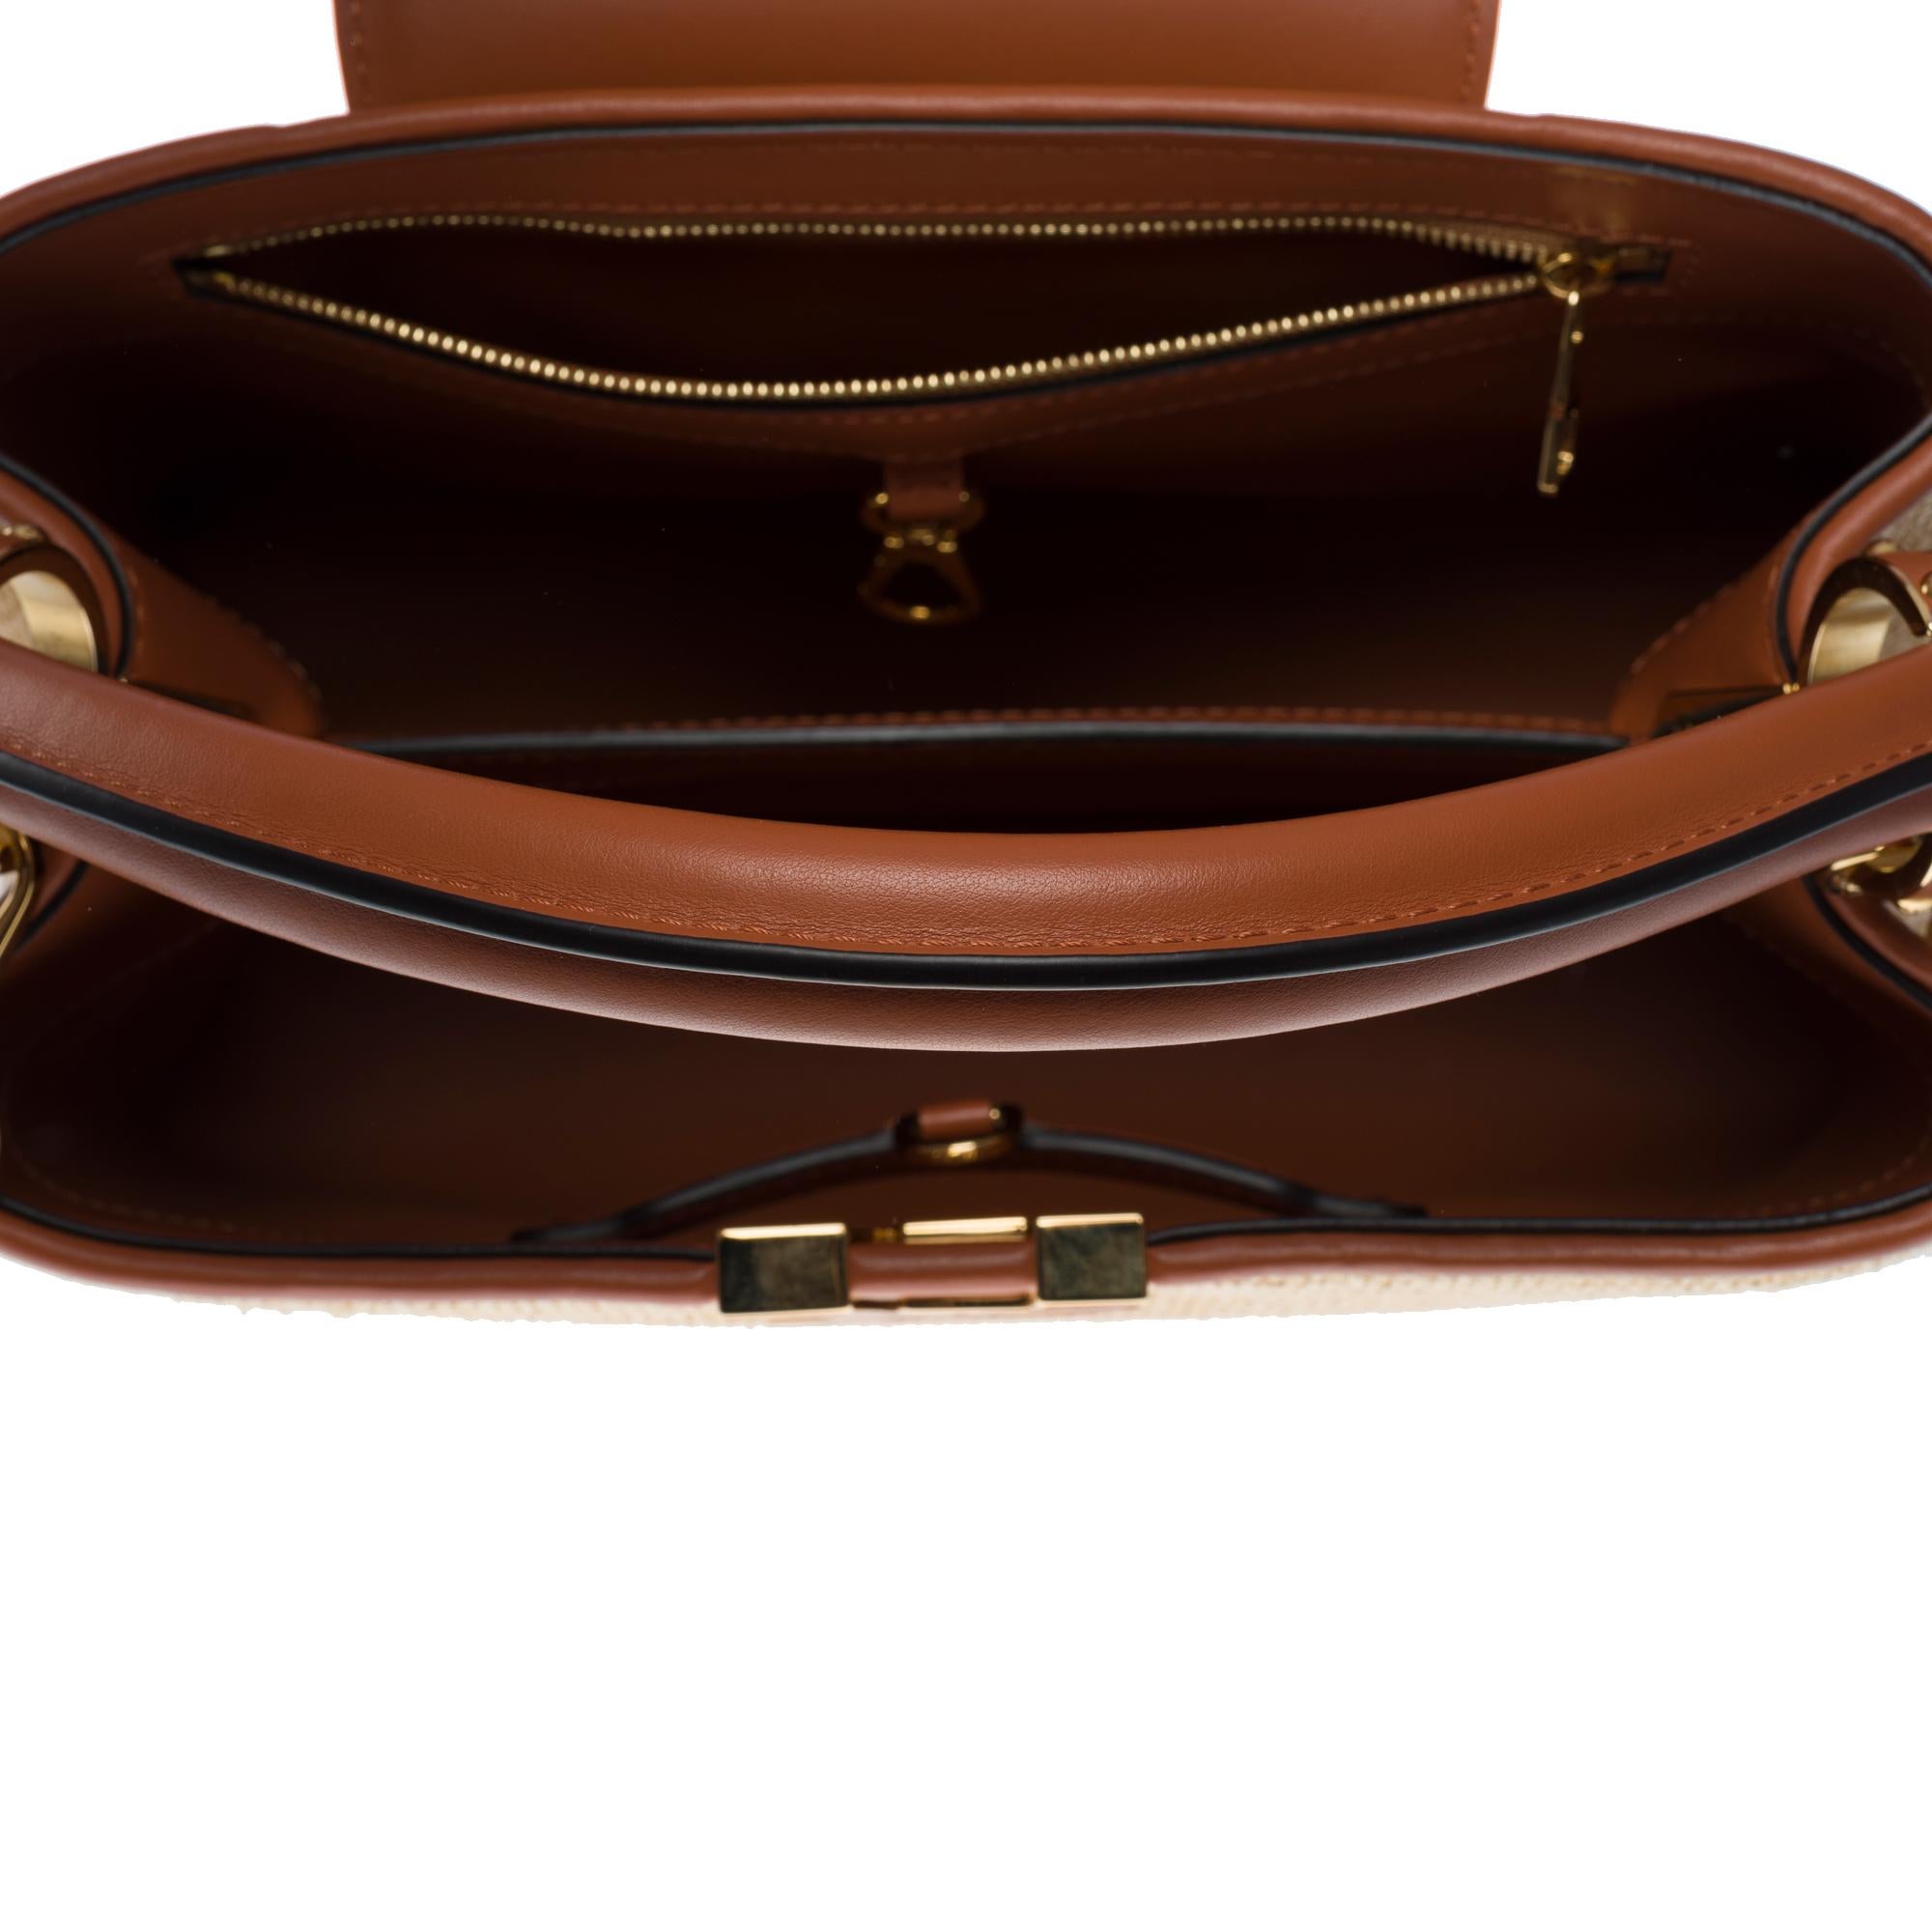 Limited Edition Louis Vuitton Capucines MM handbag strap in braided Raffia, GHW 1